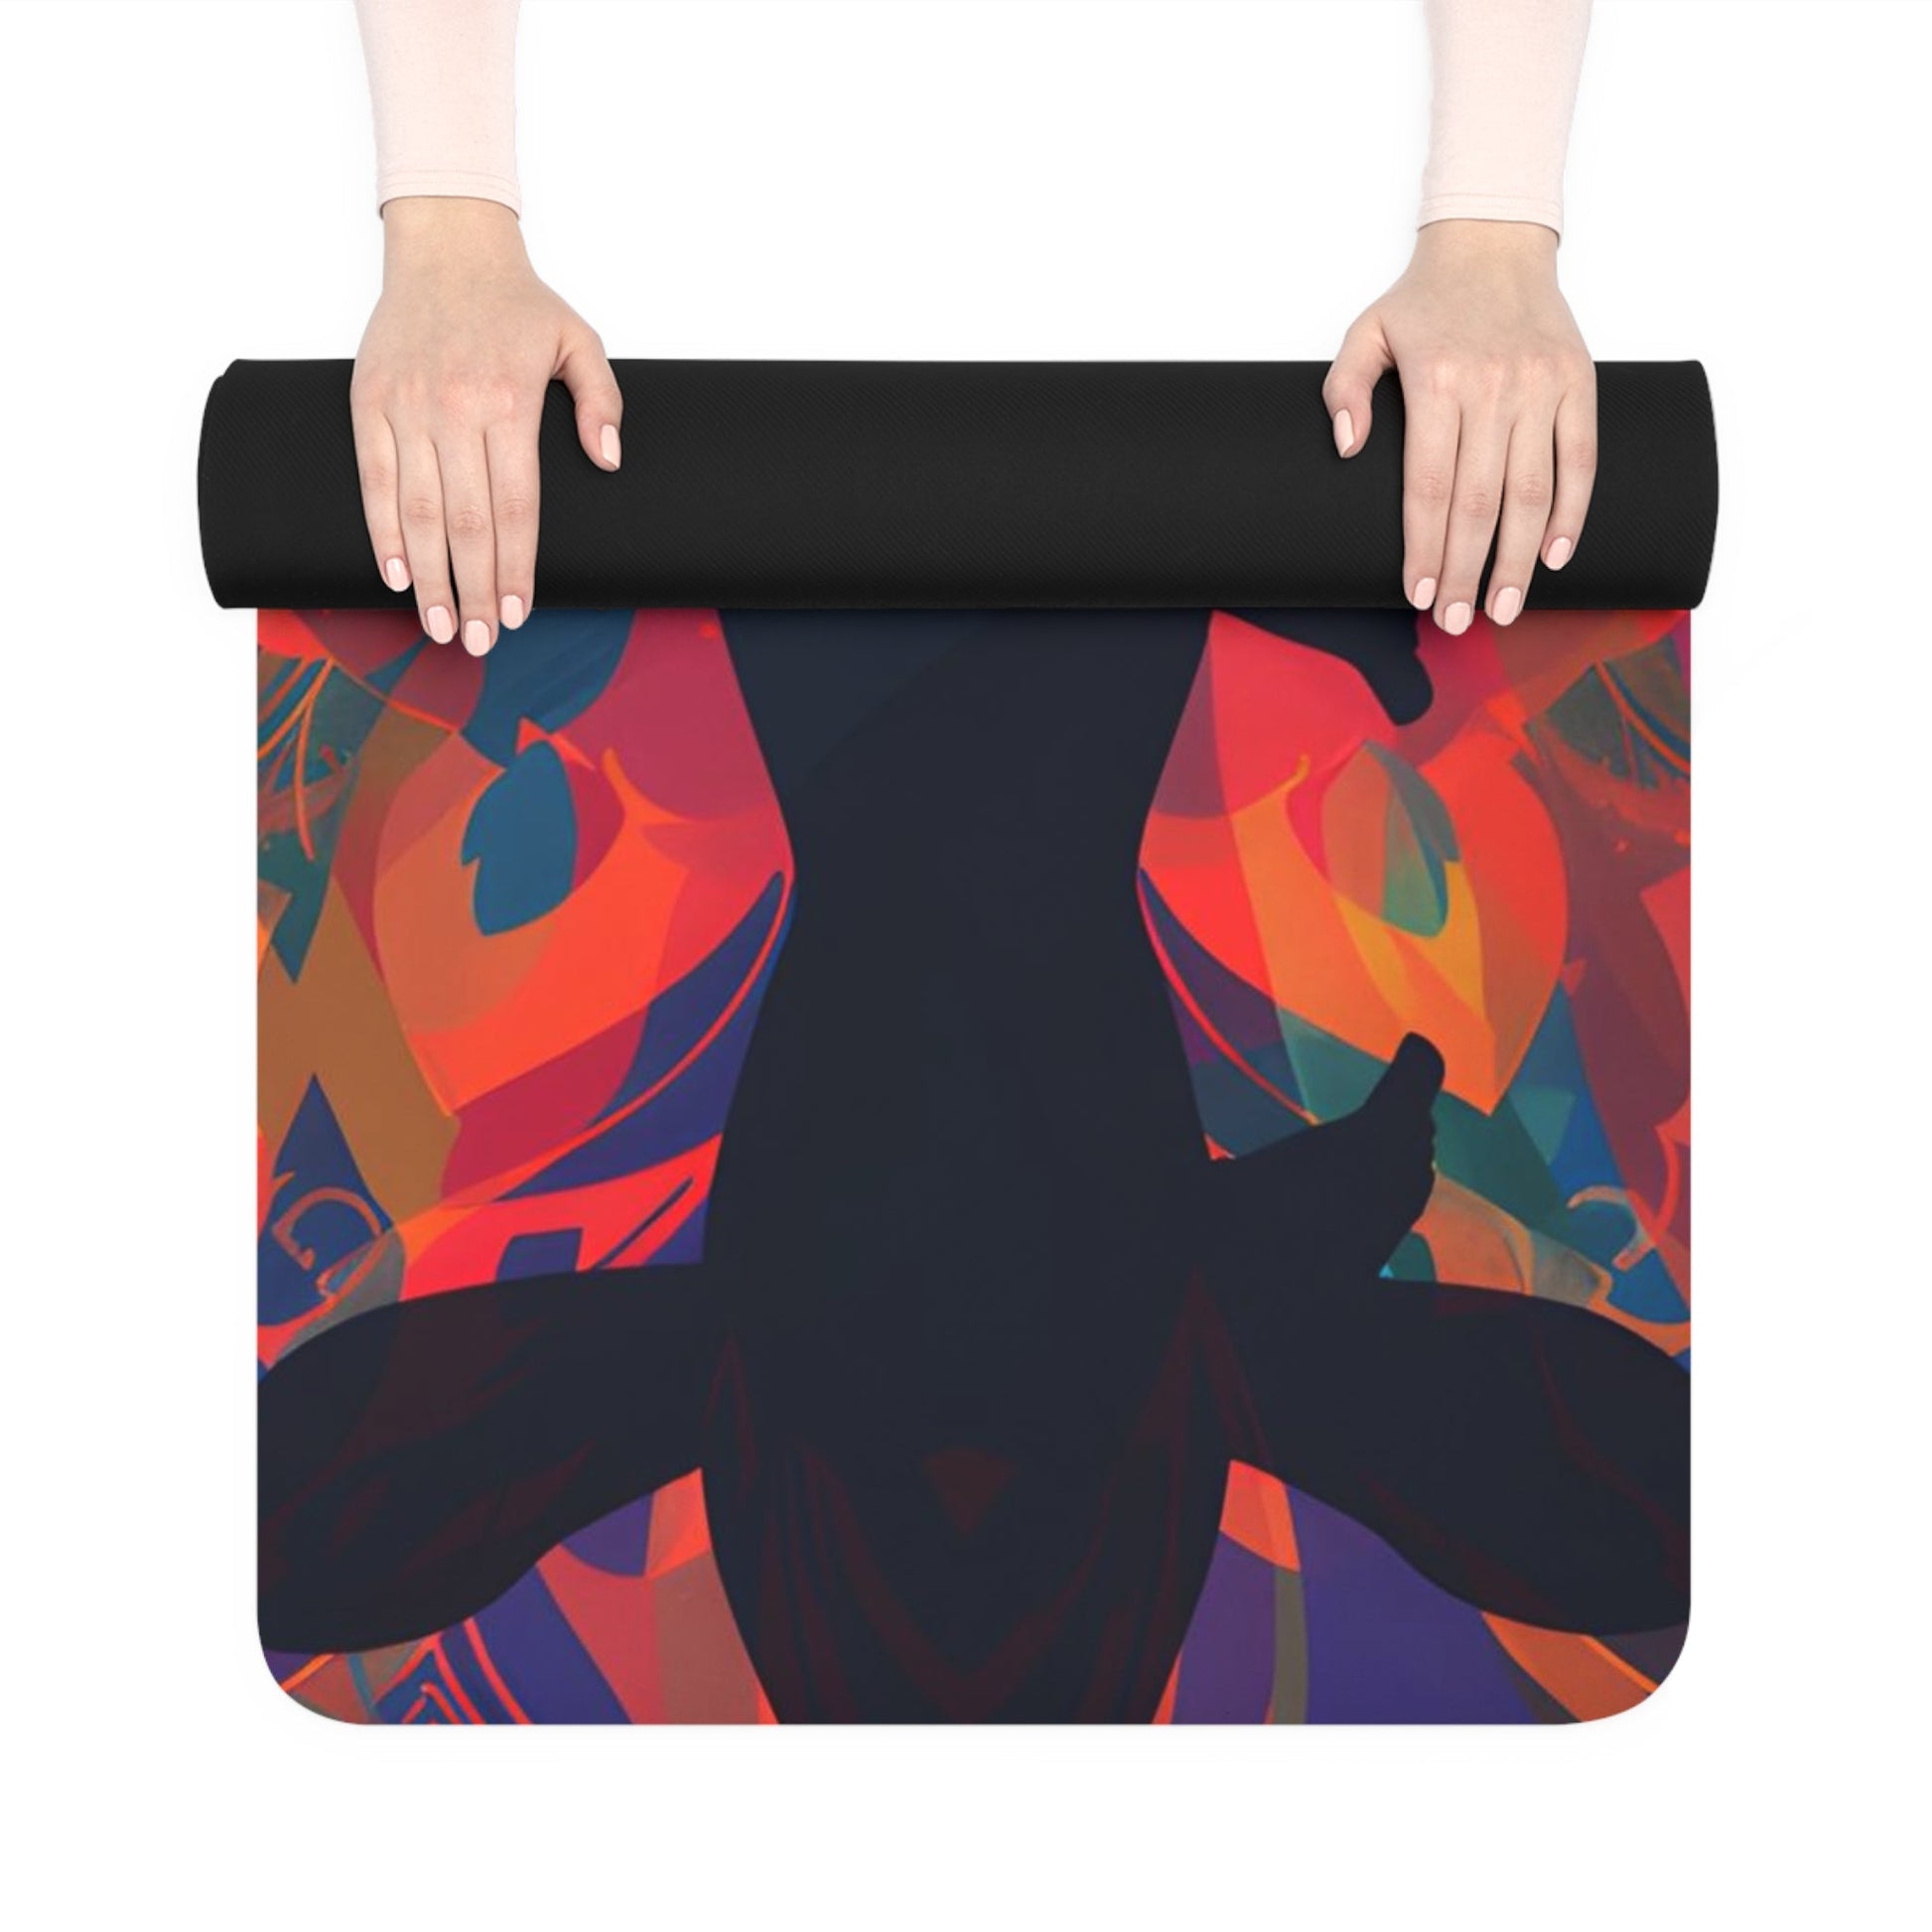 Anti - Slip Premium Quality Rubber Yoga Mat for Indoor and Outdoor Use - Yoga Mats - Taigora Activewear